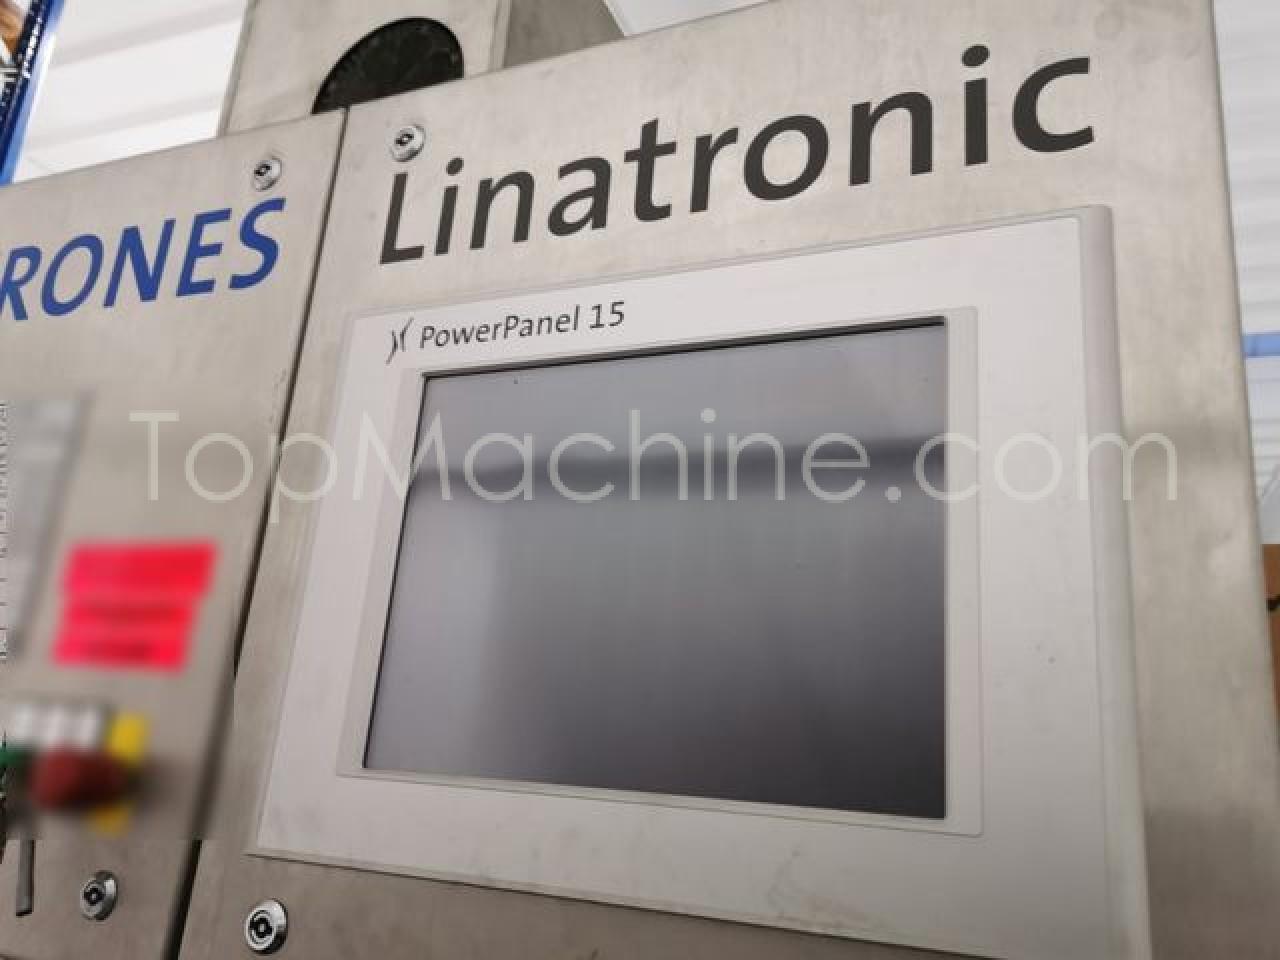 Used Krones Linatronic Bibite e Liquidi Varie